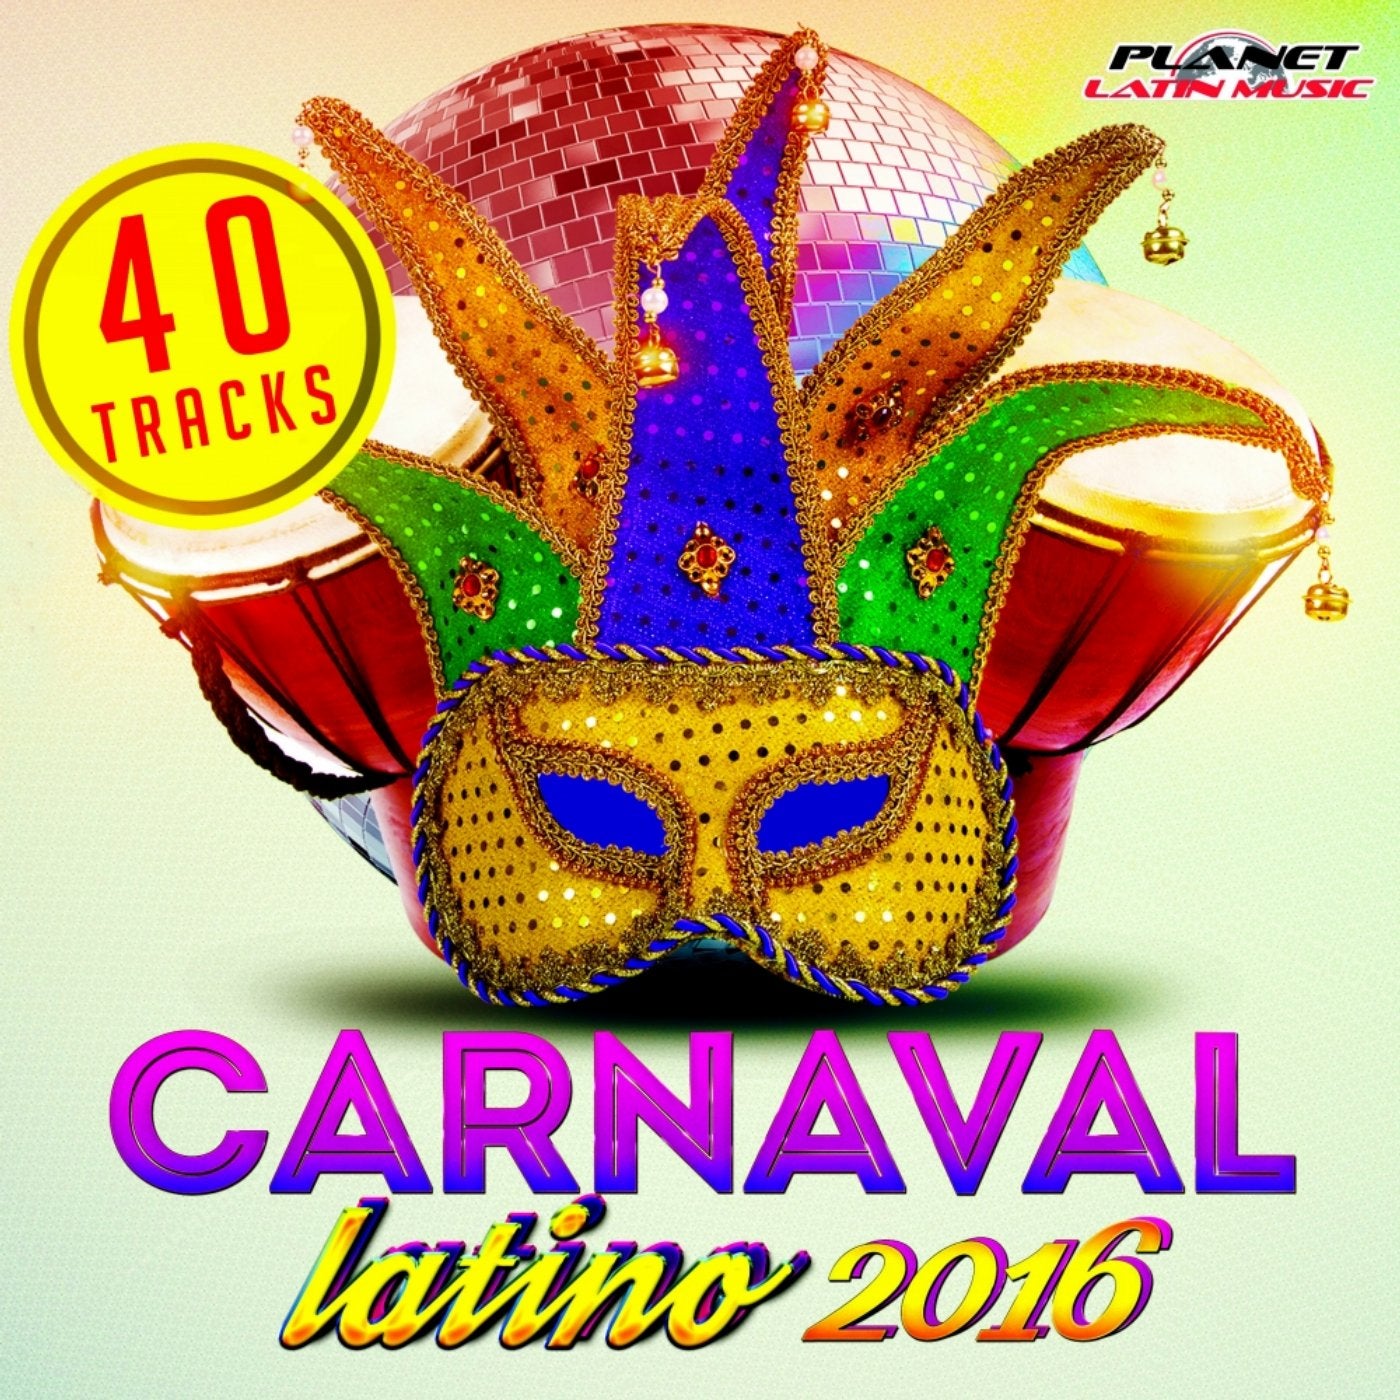 Carnaval Latino 2016